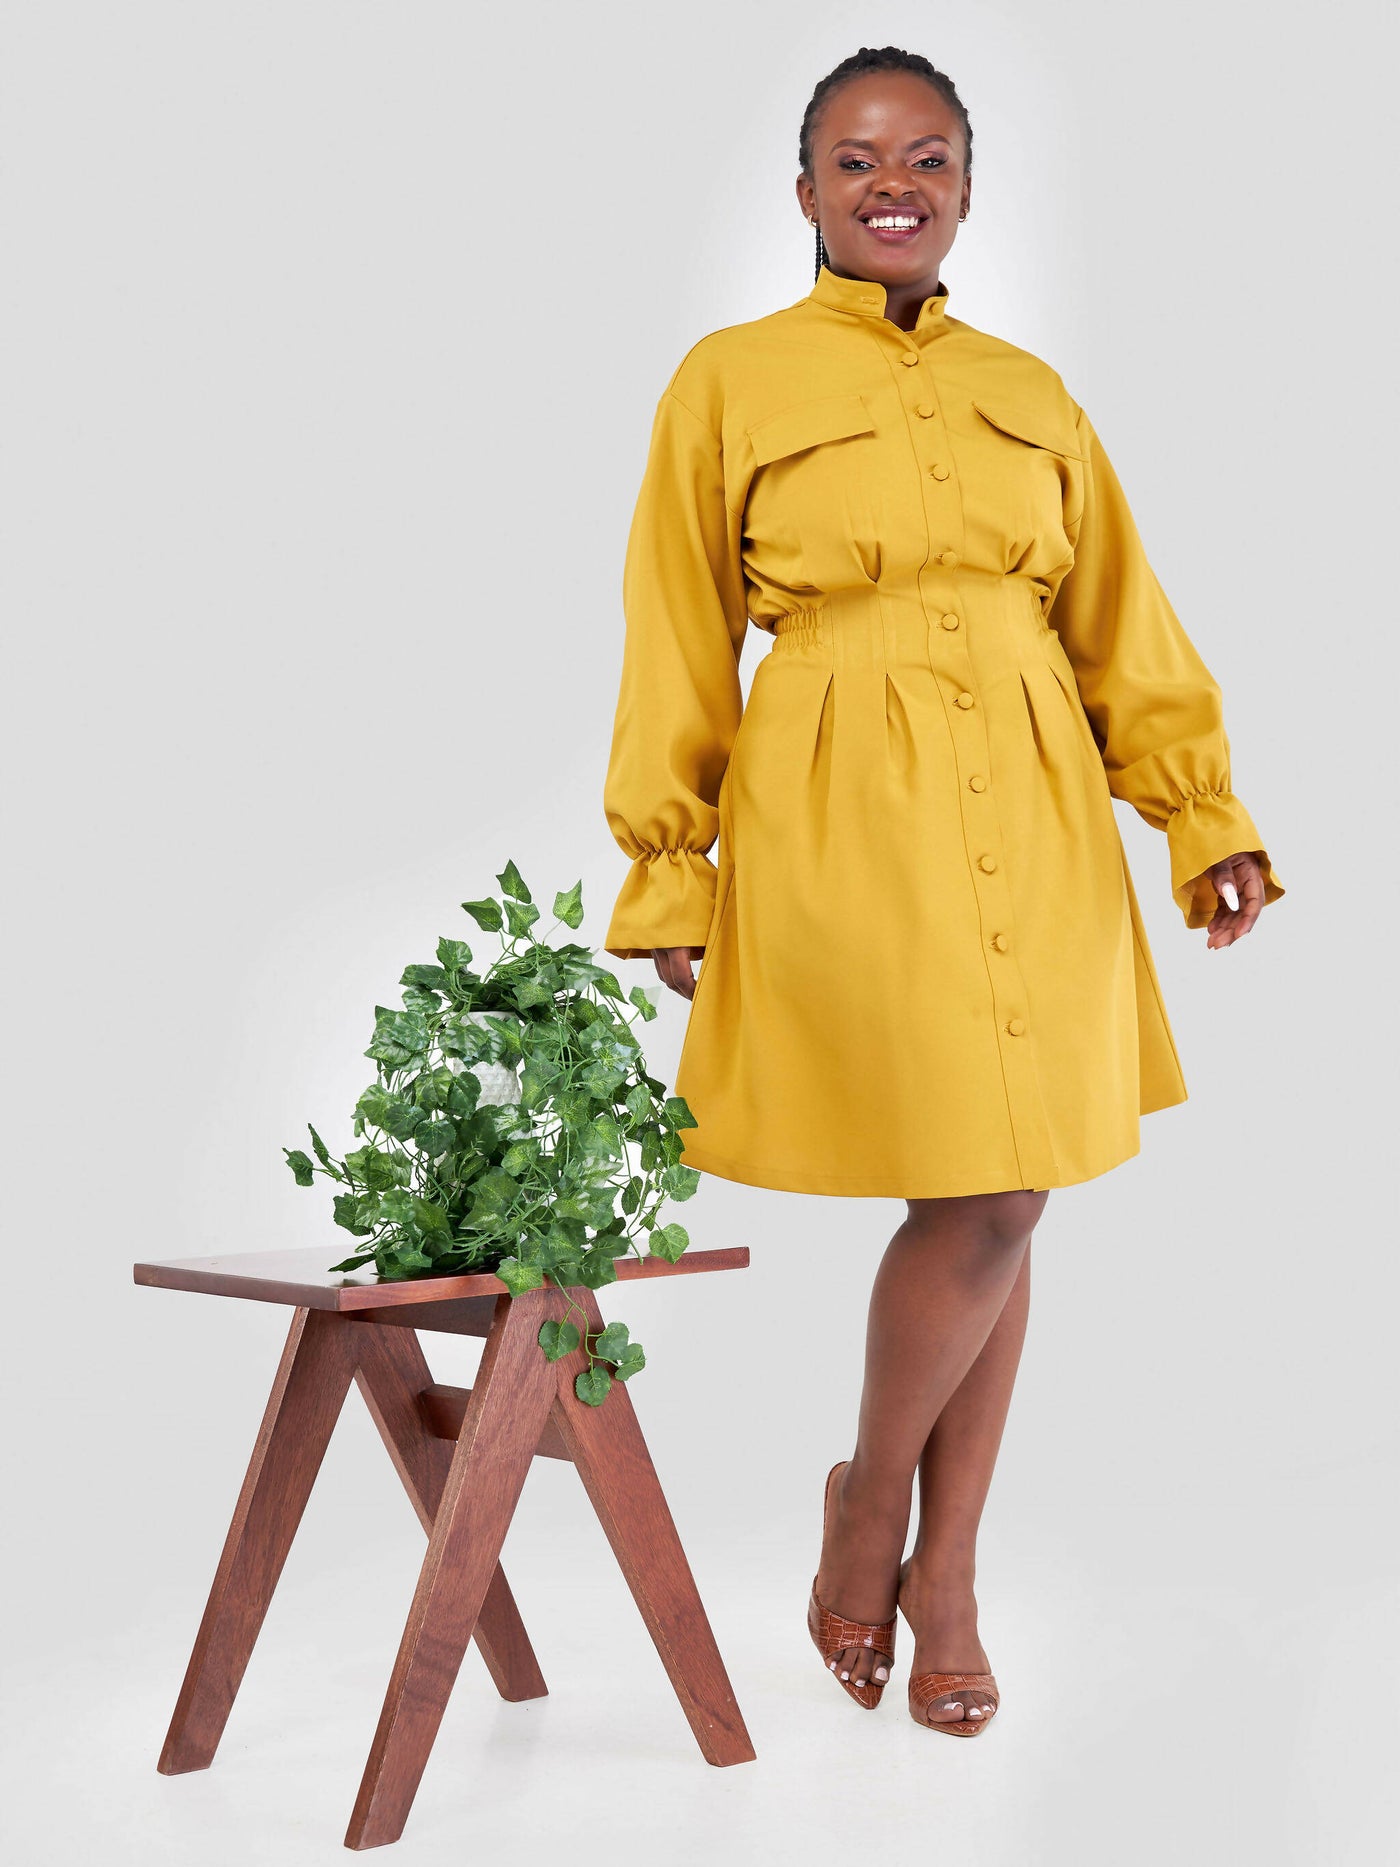 Elsie Glamour Mia Shift Dress - Mustard